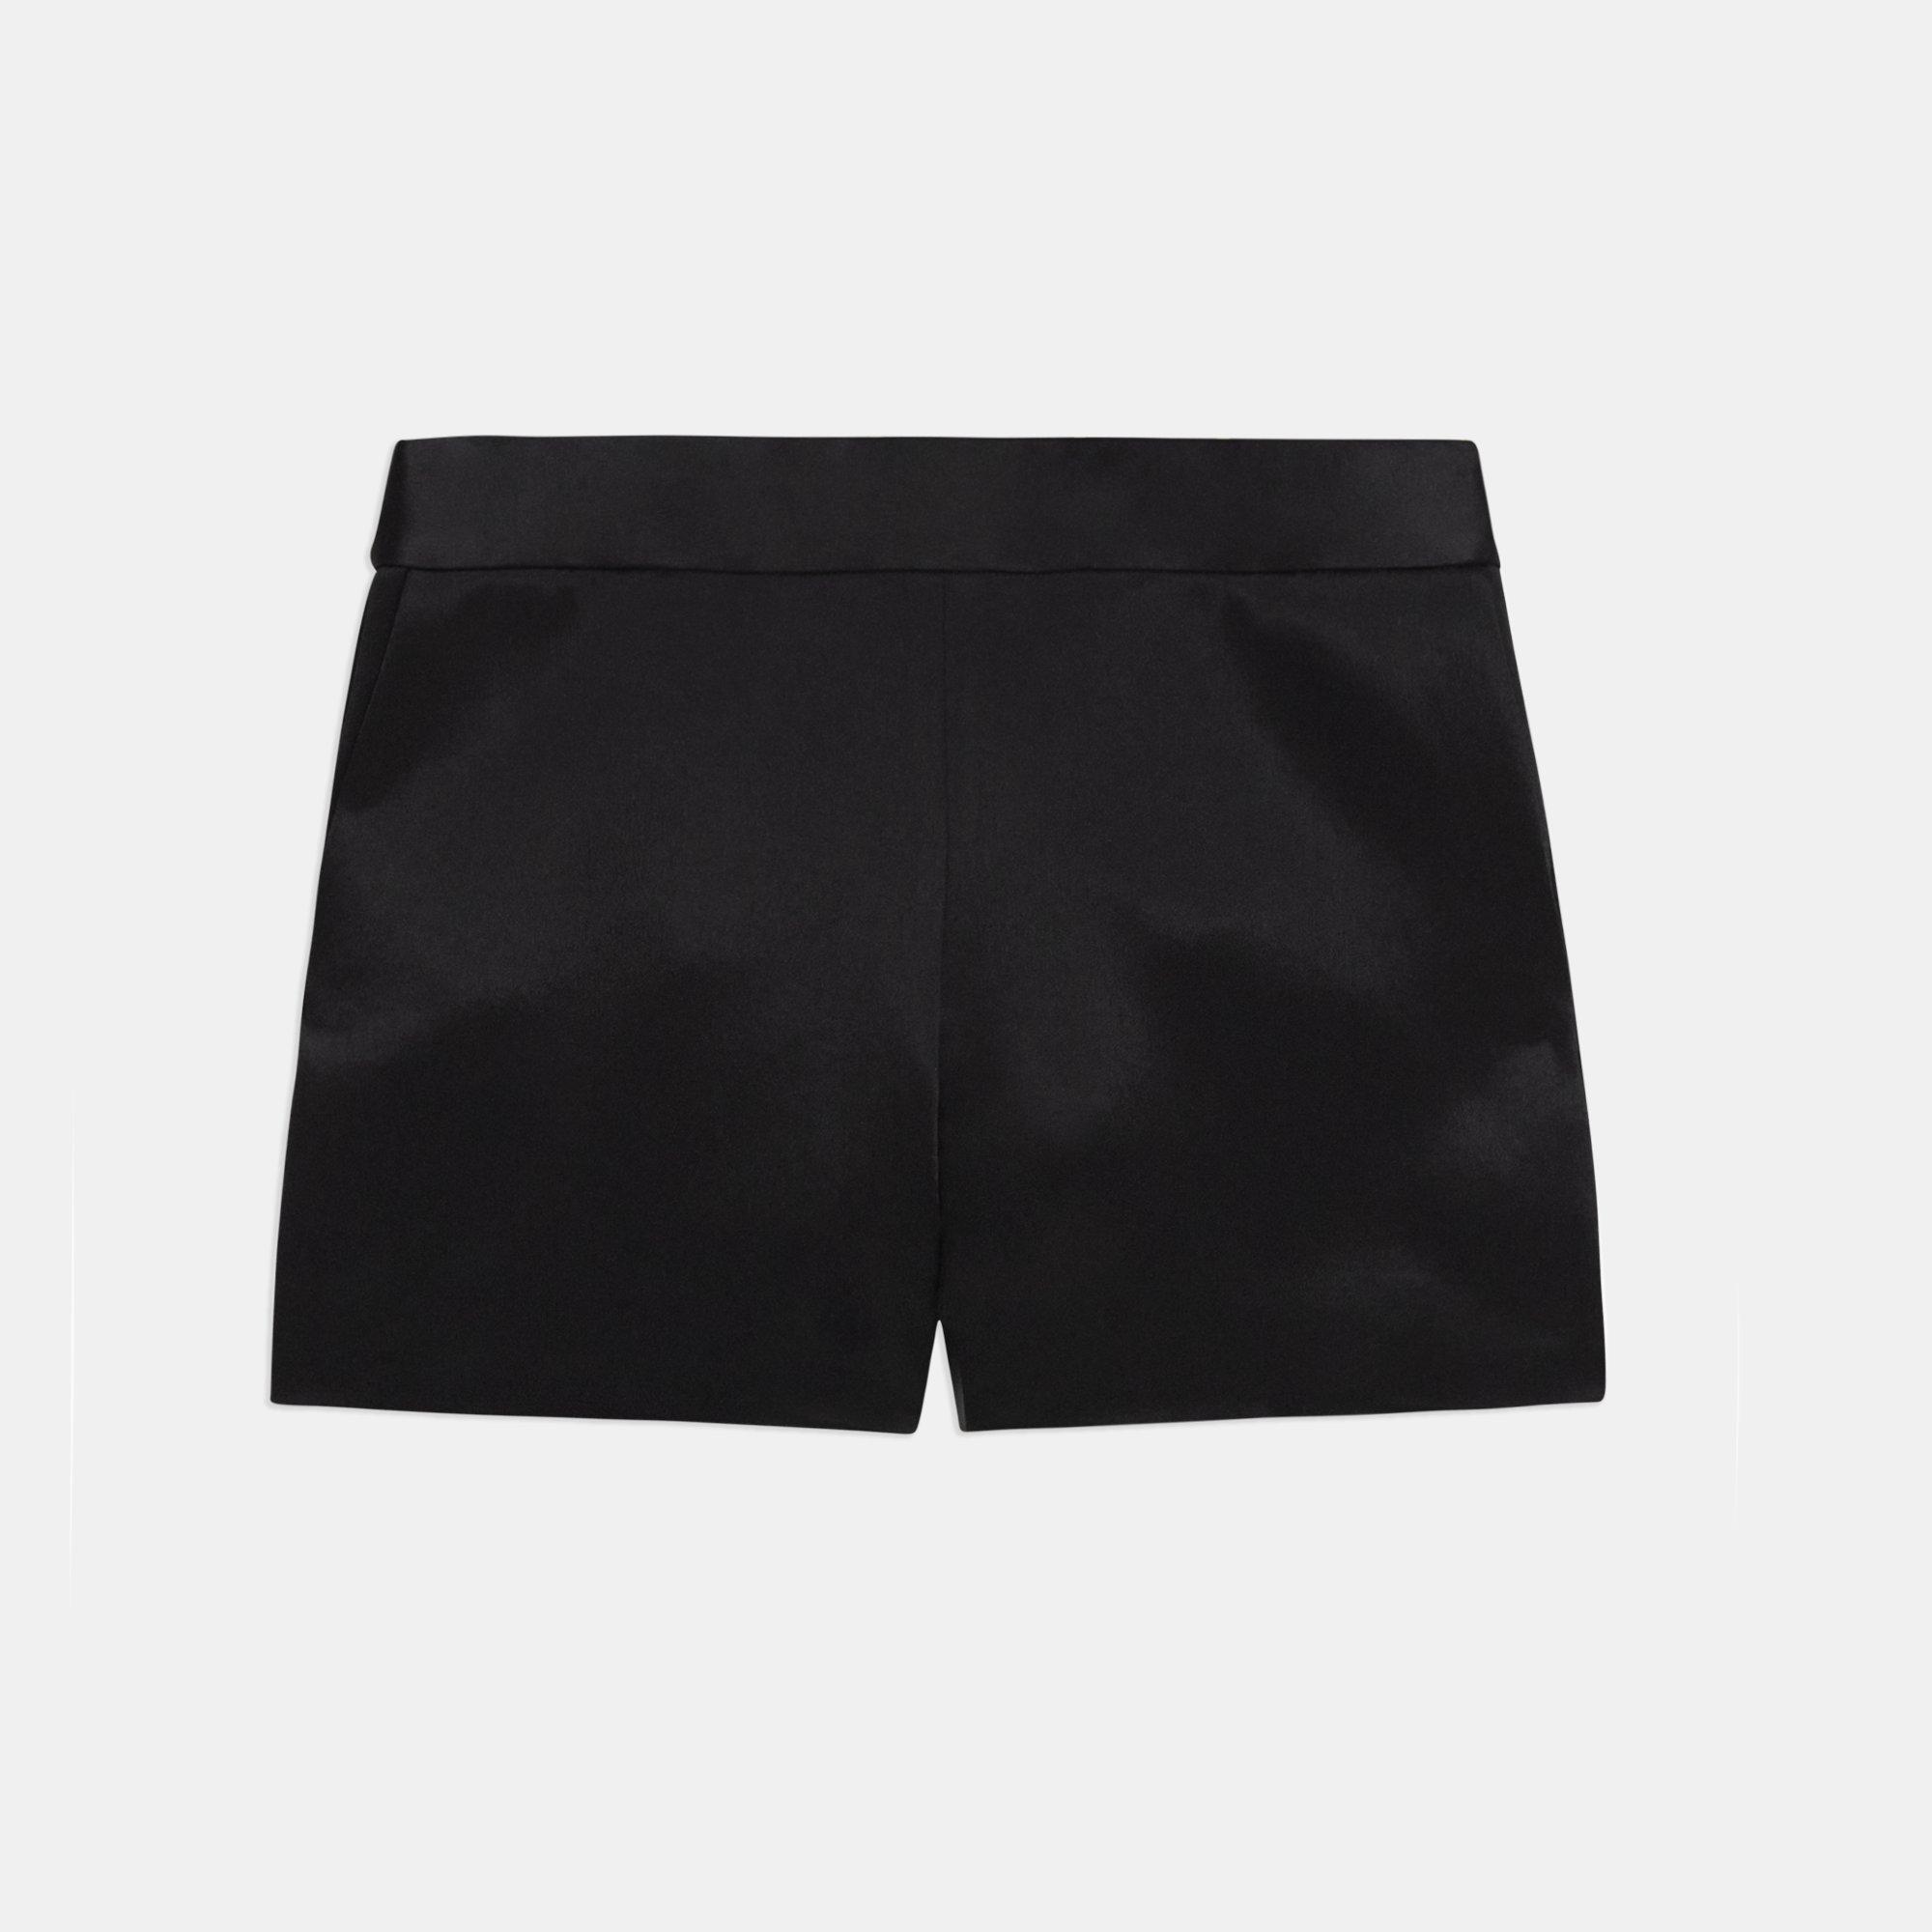 Extra Love Black Satin High-Waisted Shorts